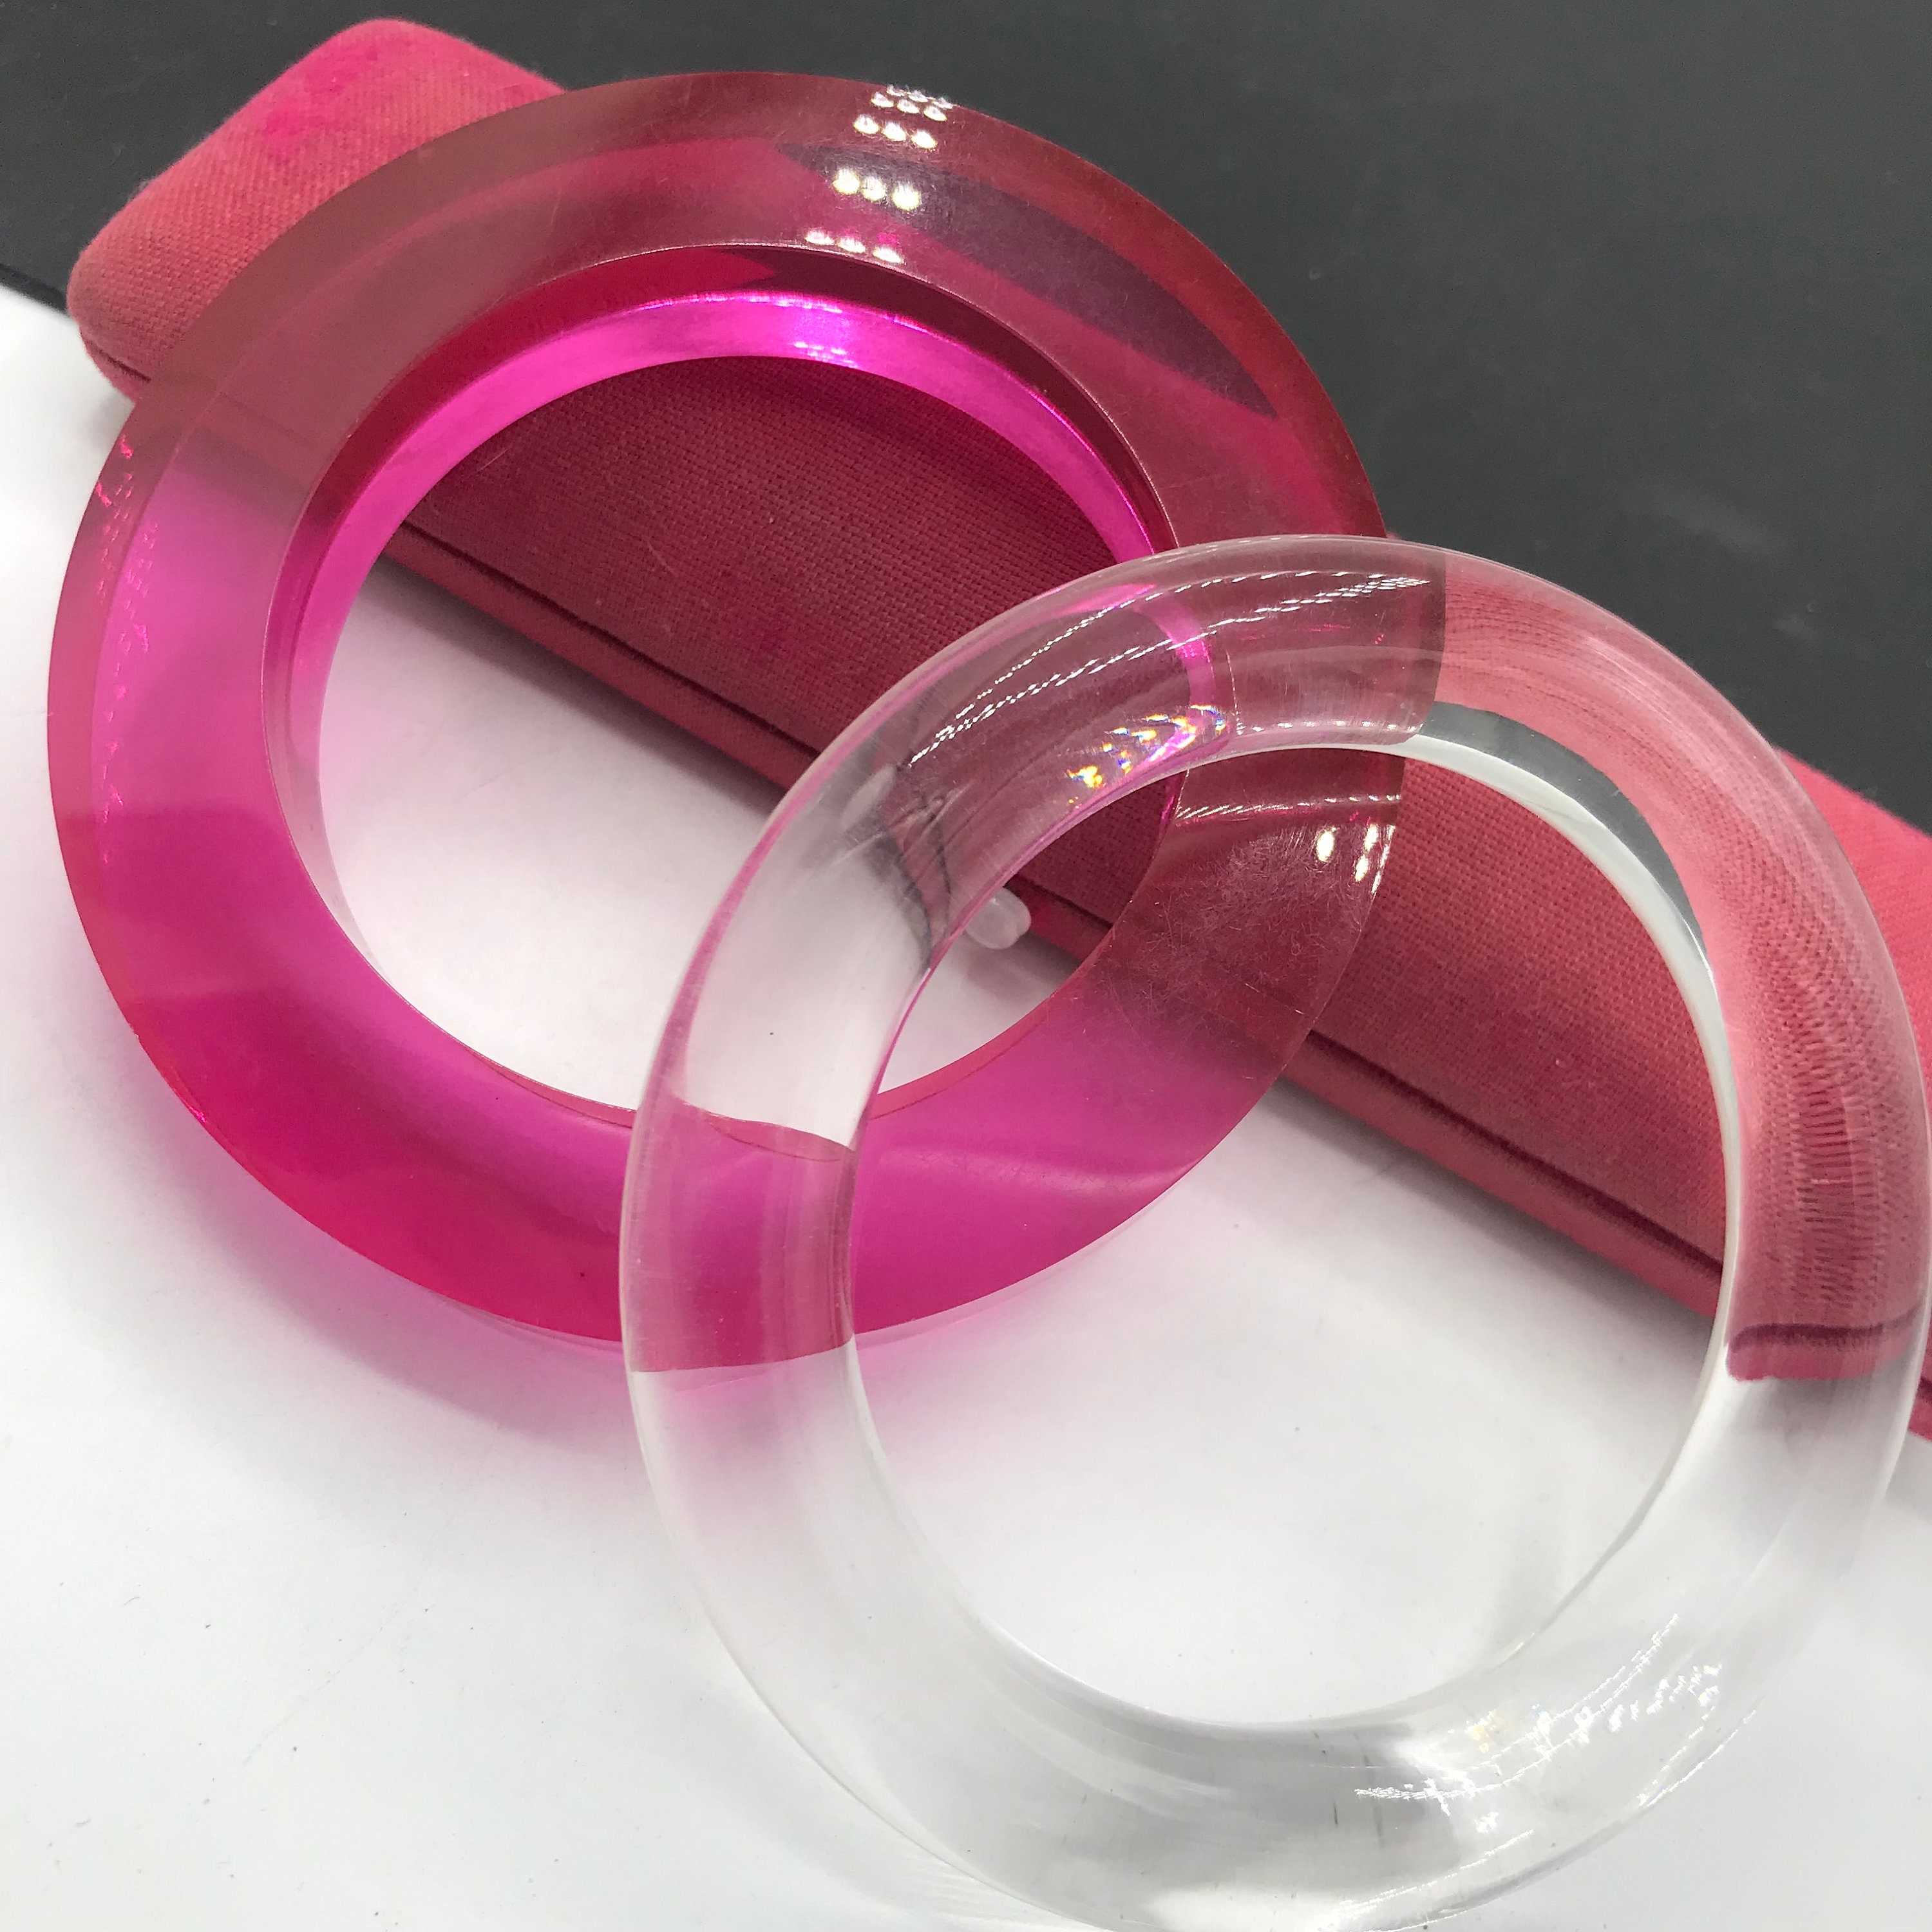 Circa 1970. Pink Plastic Bracelet, Art Plastic Bangle 